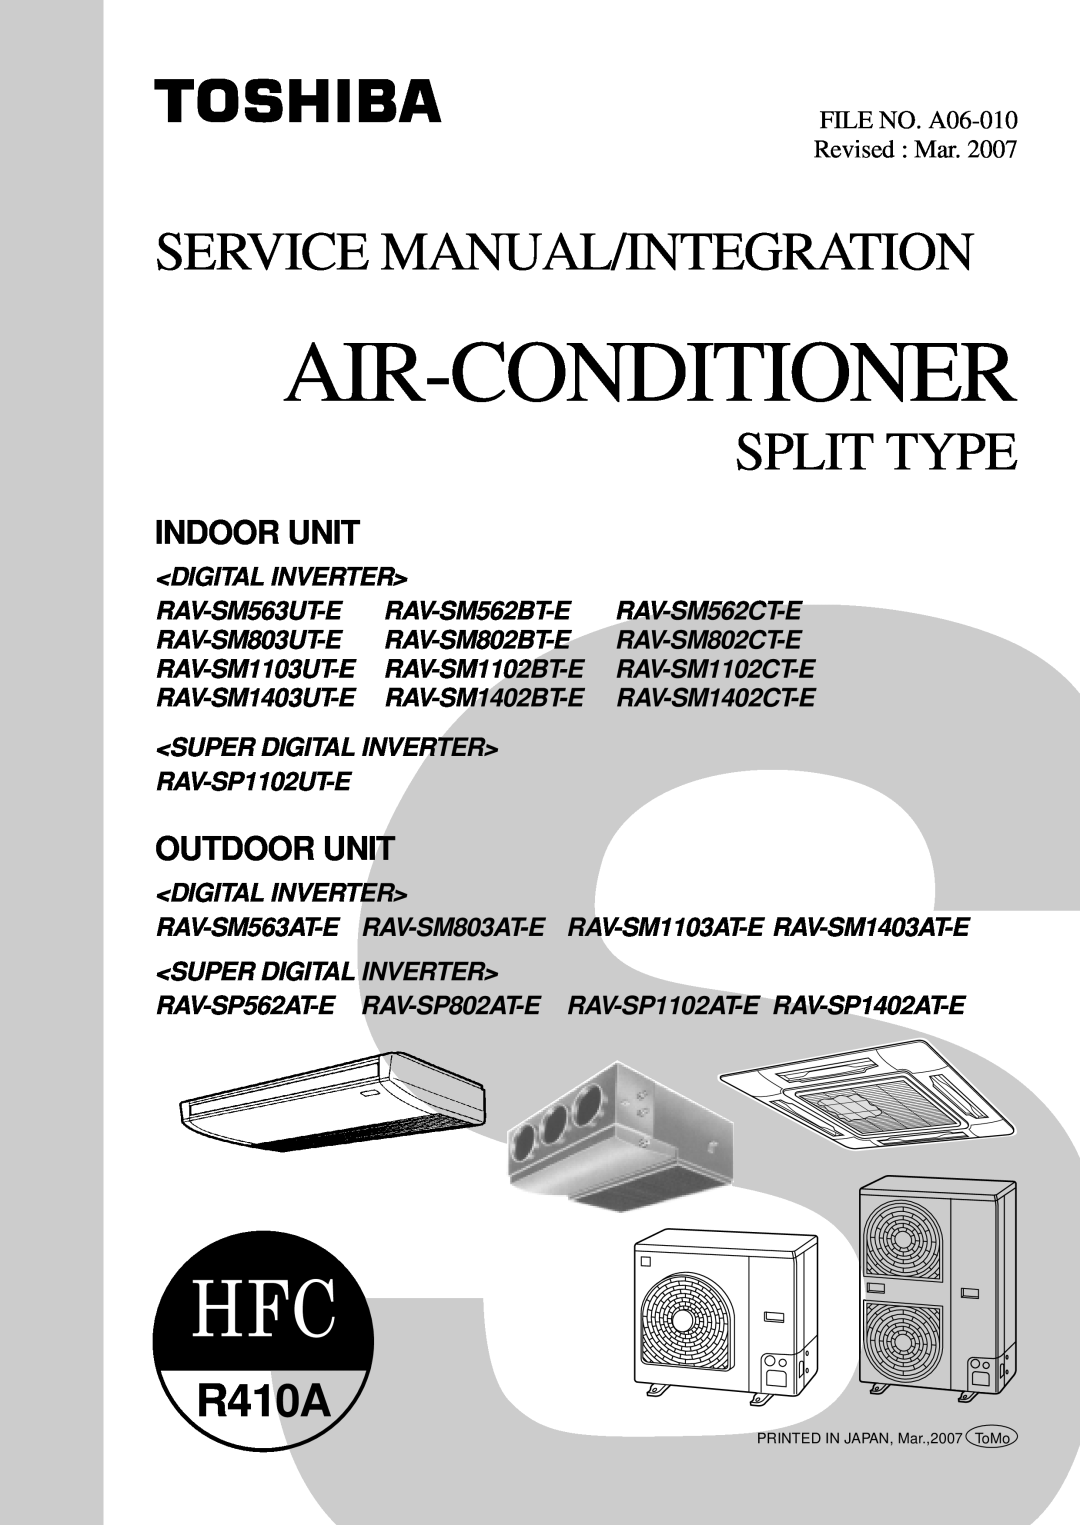 Toshiba RAV-SM1102BT-E service manual Indoor Unit, Outdoor Unit, Air-Conditioner, Service Manual/Integration, Split Type 